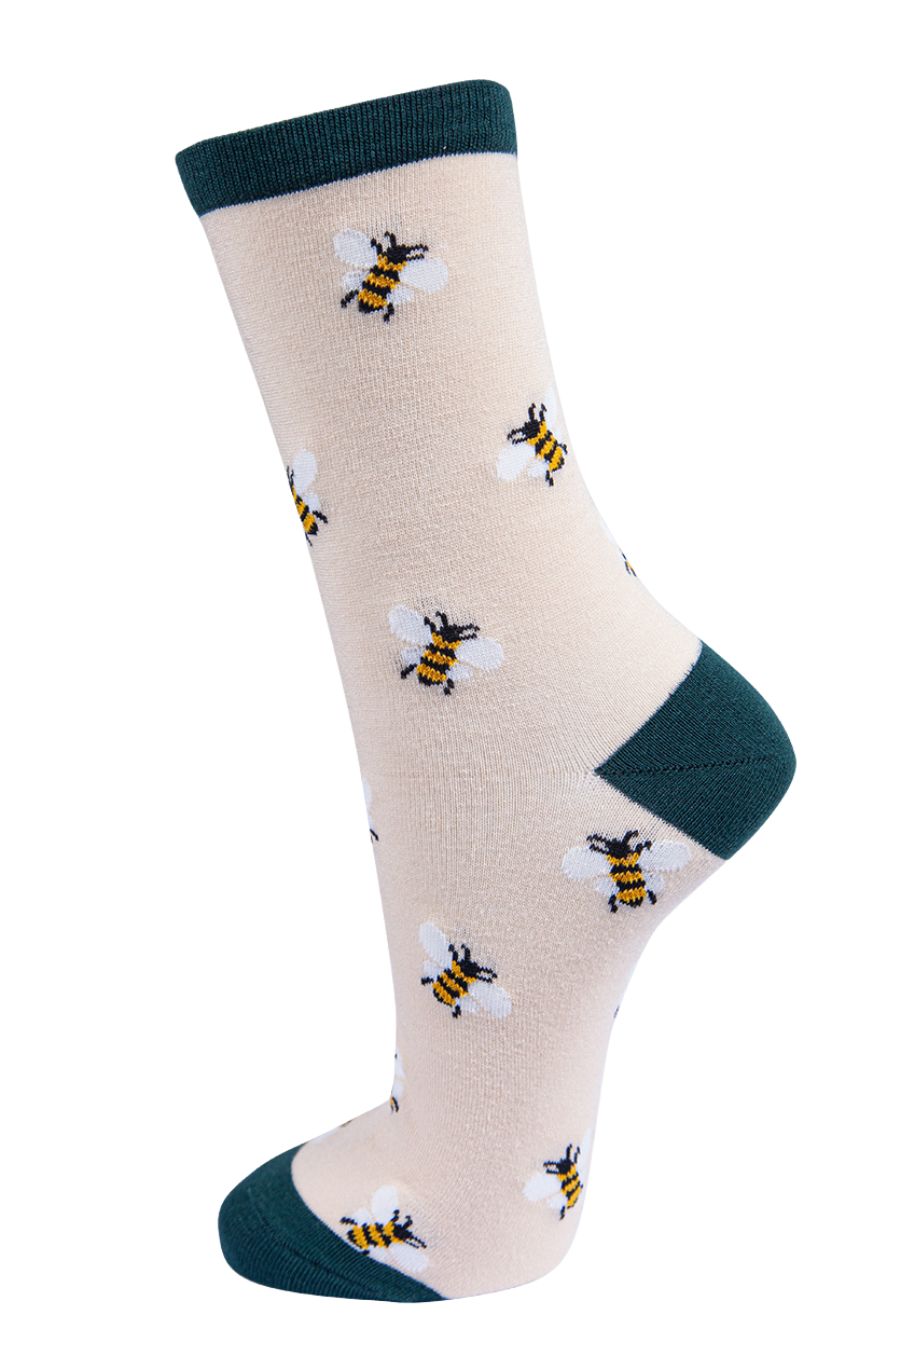 cream bamboo socks, green toe, heel and trim, all over bee print